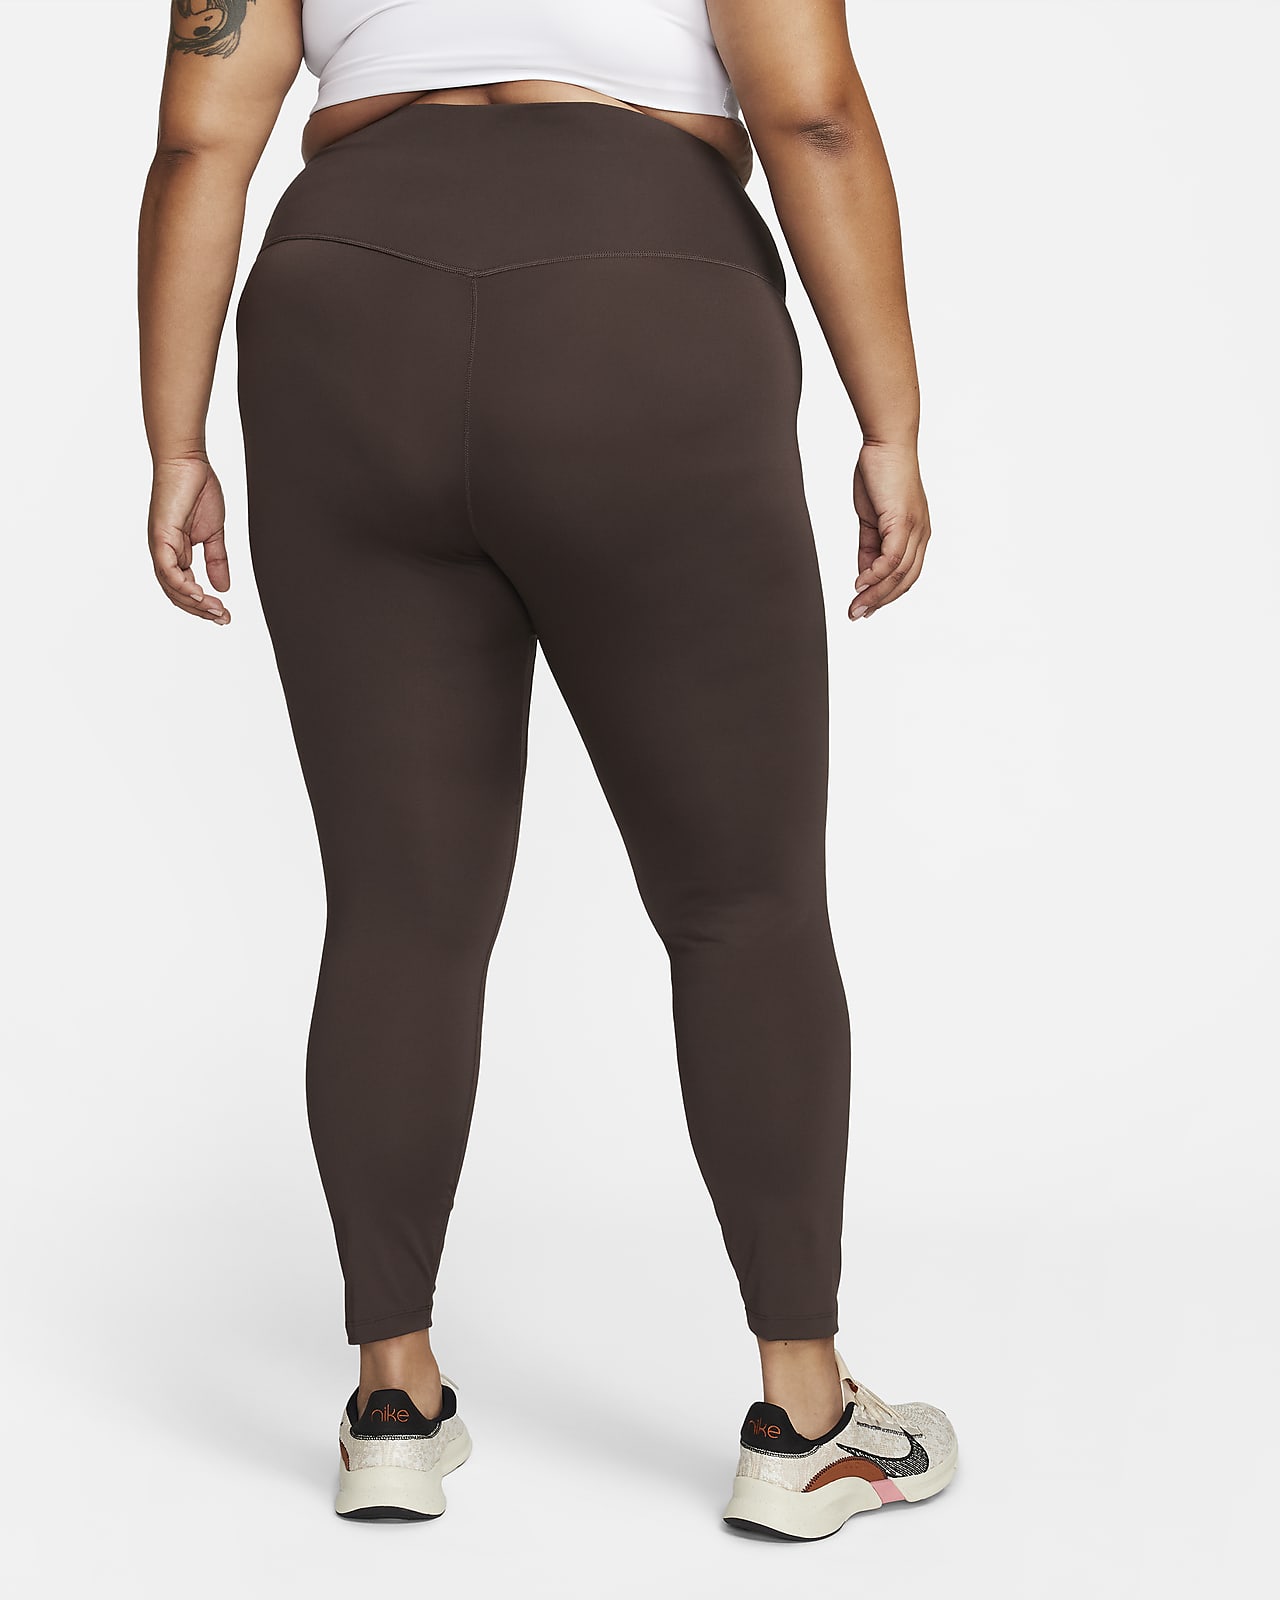 Women's Nike One Dri-FIT high-rise leggings